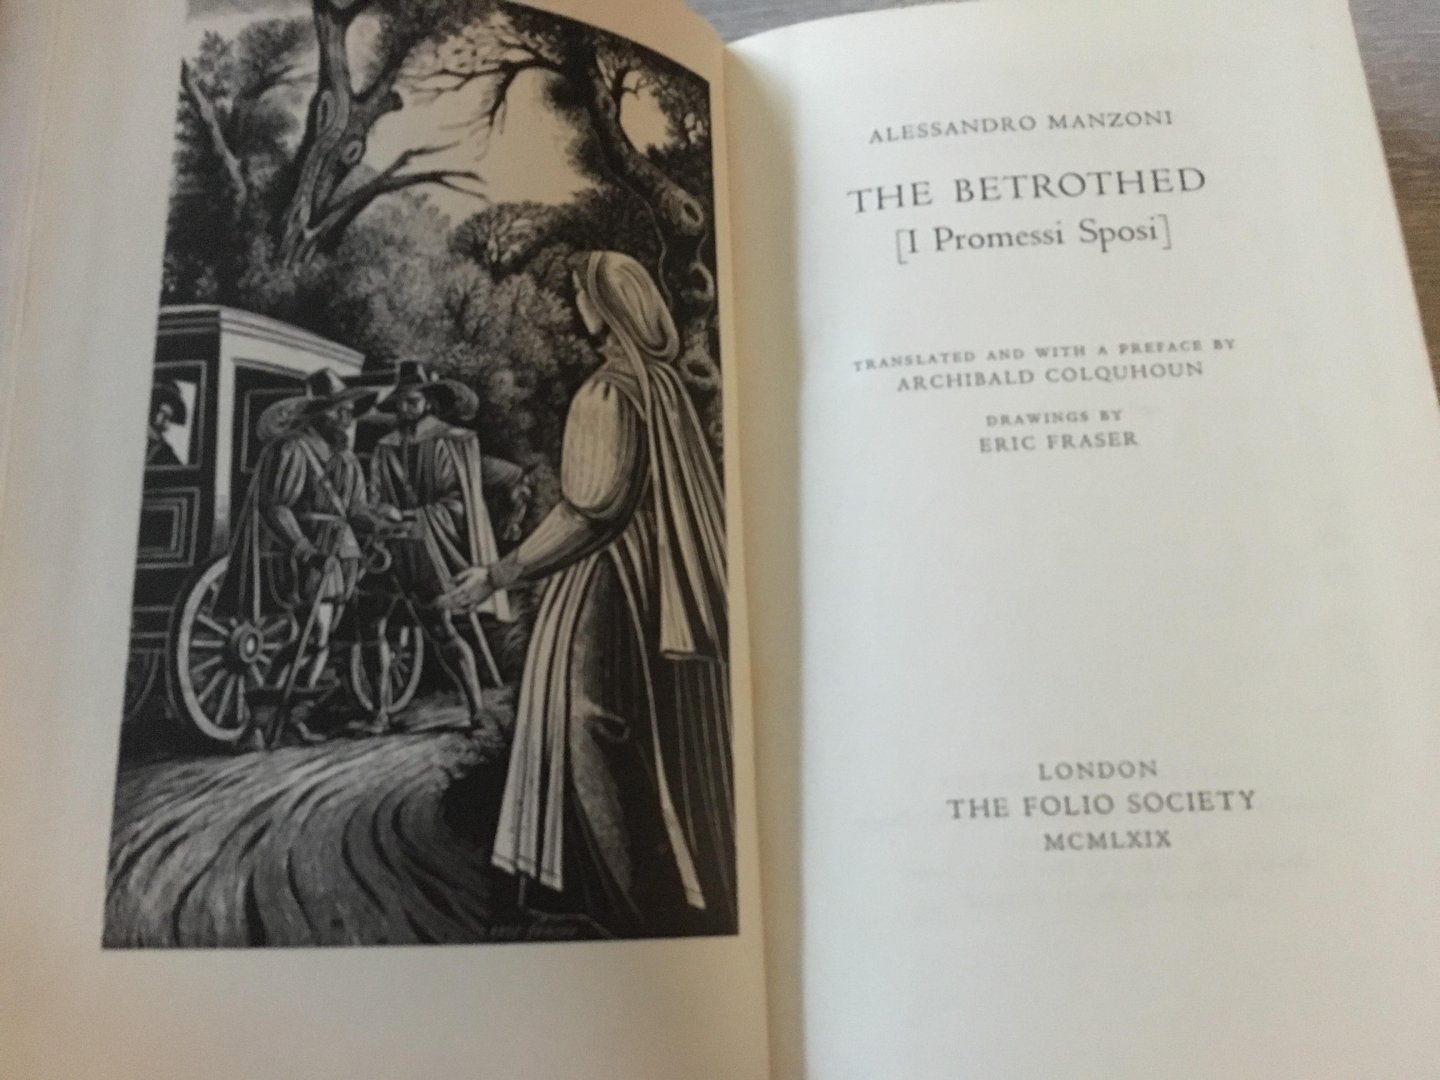 Alessandro Manzoni, Eric Fraser, Archibald Colquhoun - The Folio Society; The Betrothed (I Promessi Sposi)